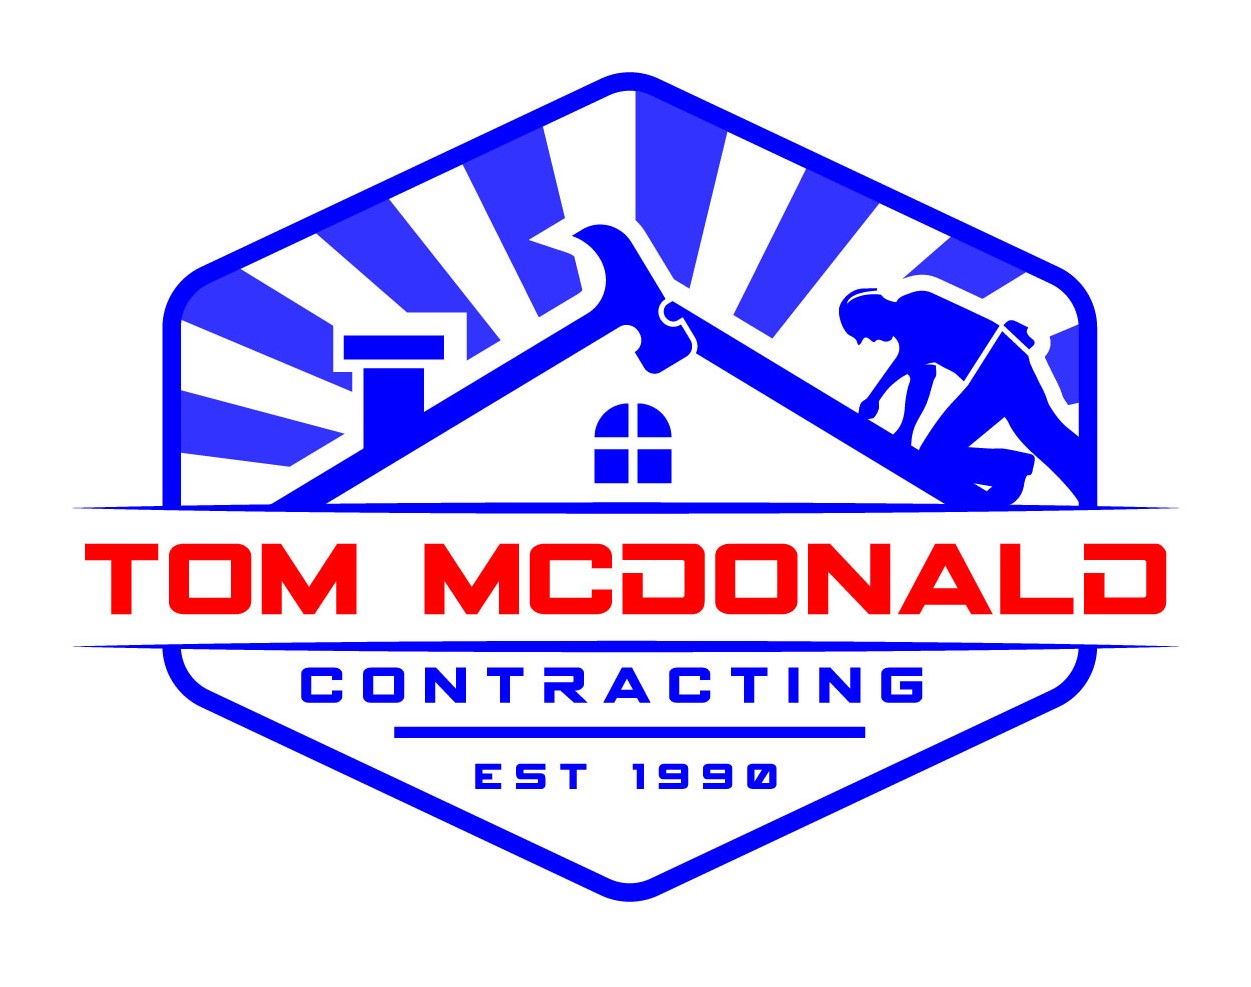 Tom mcdonald contracting